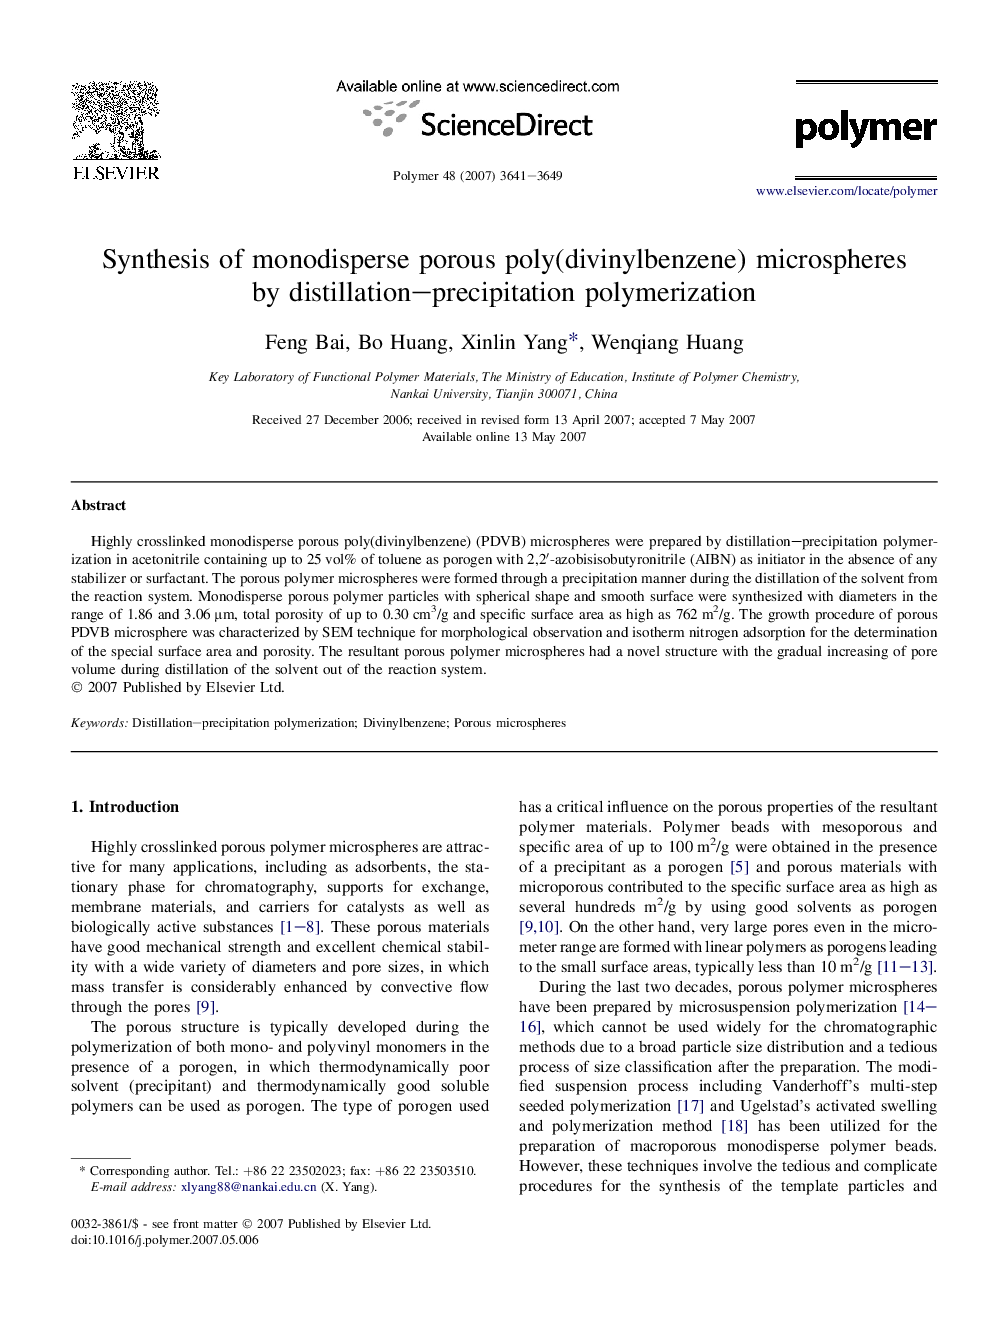 Synthesis of monodisperse porous poly(divinylbenzene) microspheres by distillation-precipitation polymerization